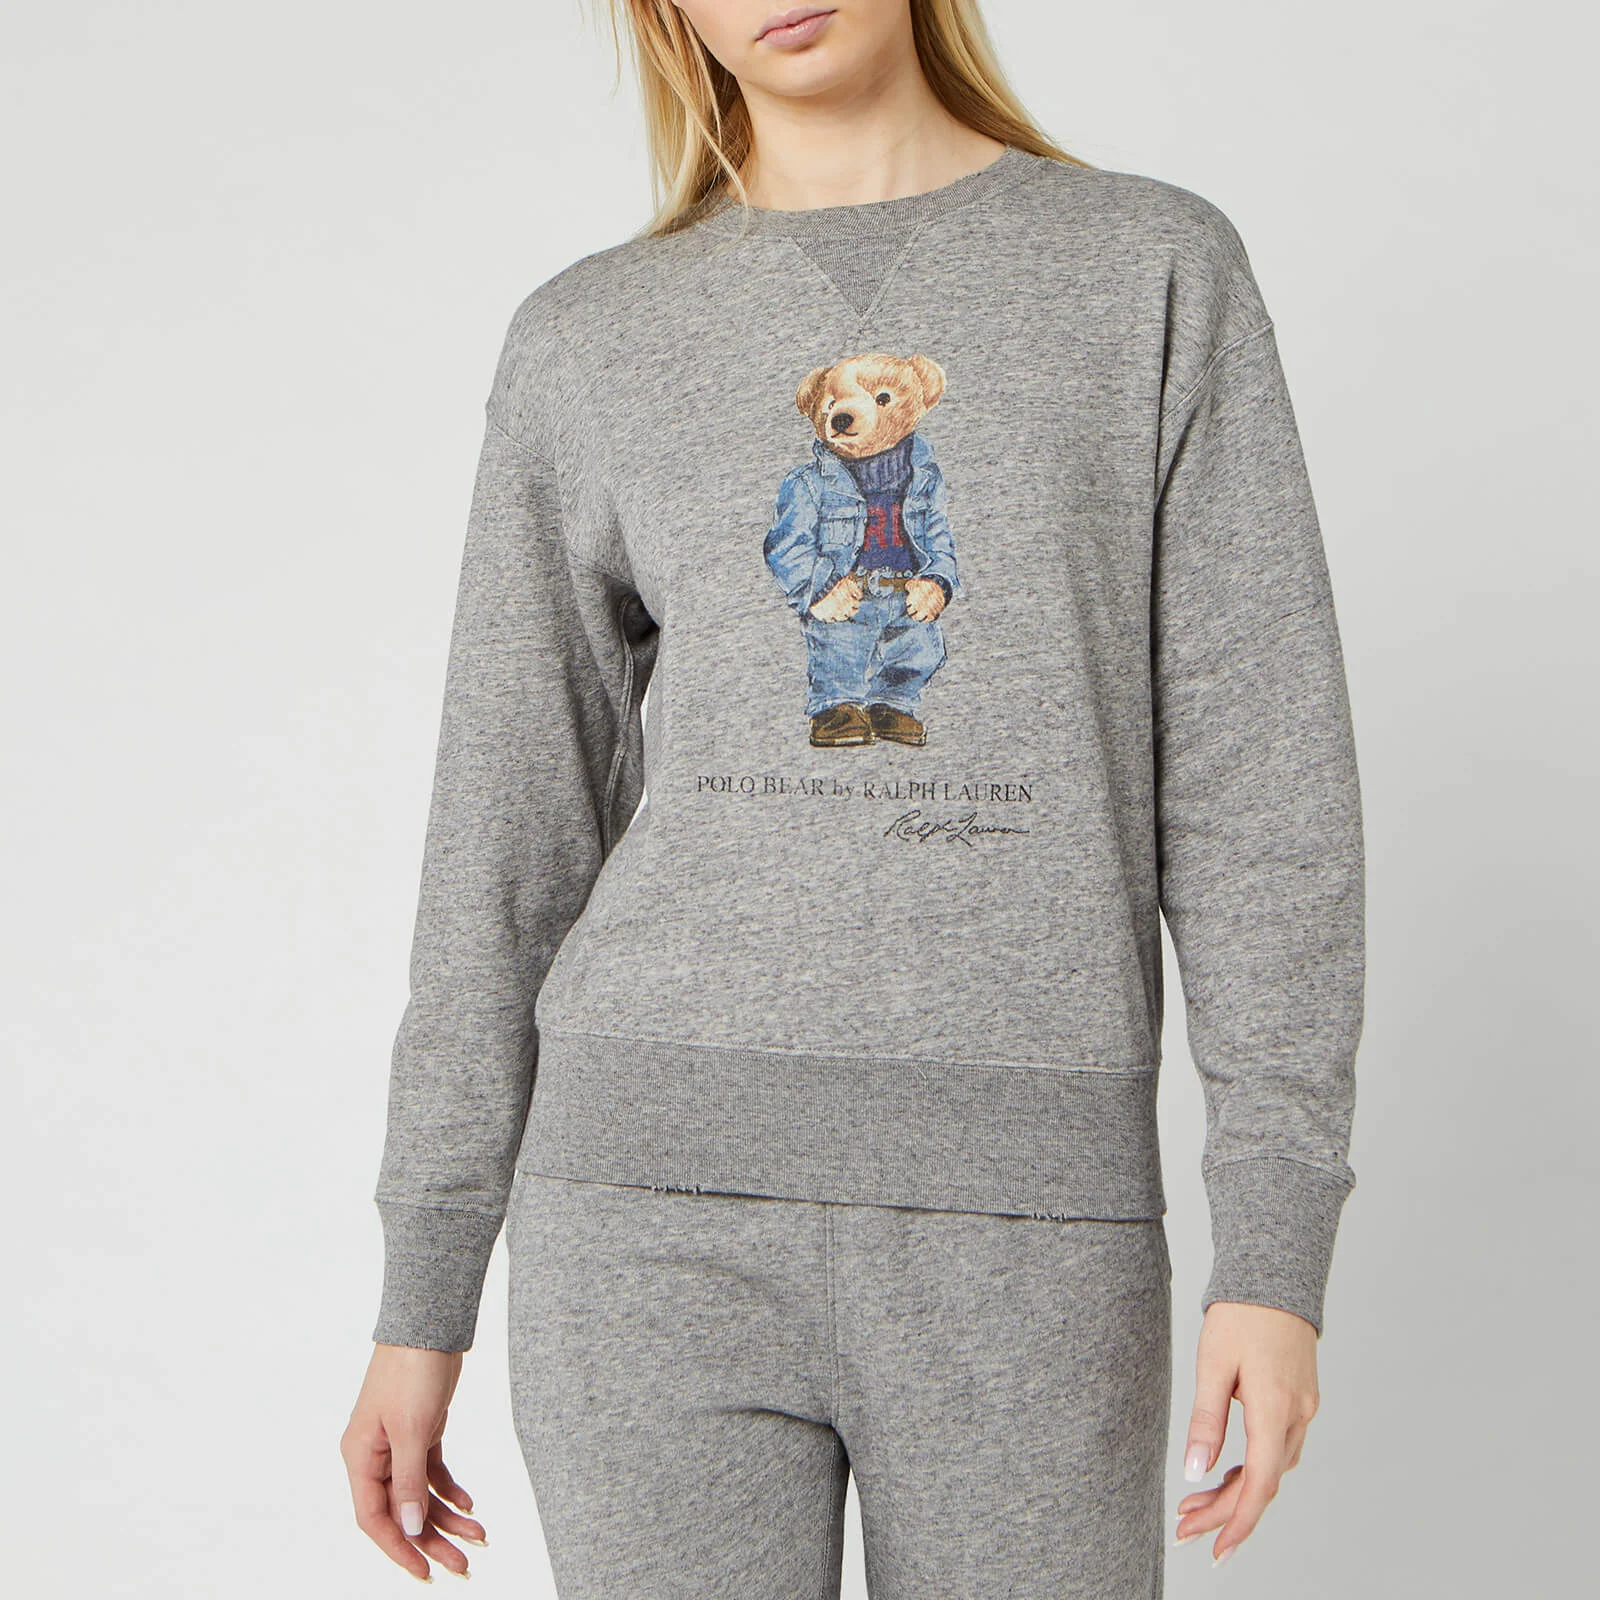 Polo Ralph Lauren Women's Denim Bear Sweatshirt - Dark Vintage Heather Image 1